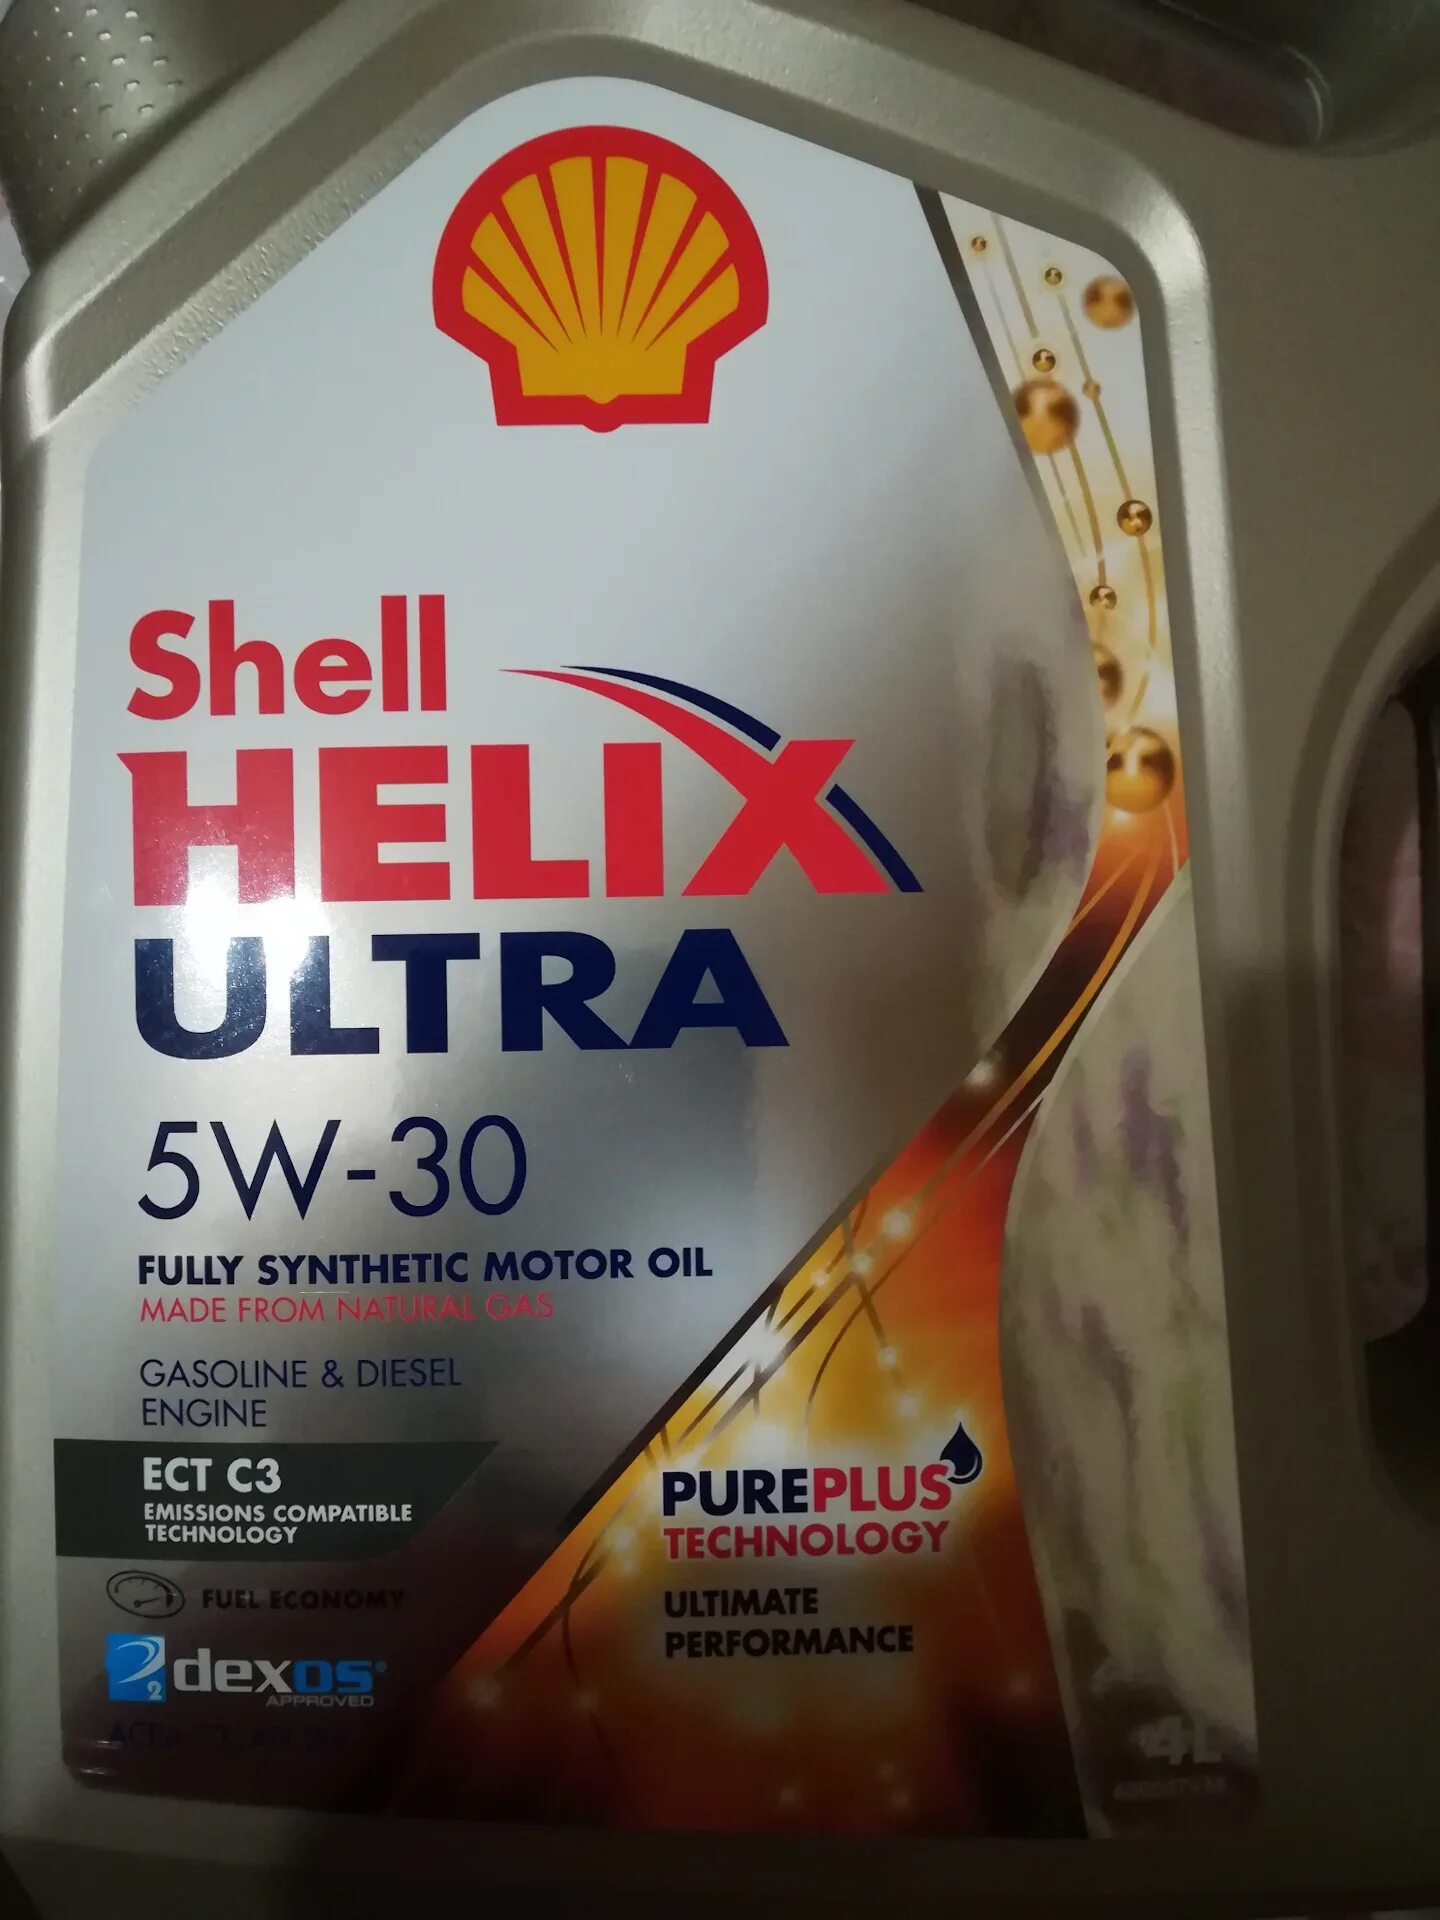 Масло подходящее для хендай солярис. Shell 5w30 Hyundai. Масло Шелл Хеликс ультра 5w30 для Хендай Солярис. Shell Helix Ultra 5w30 в Хендай Солярис. Шелл ультра 5w30 Хундай.